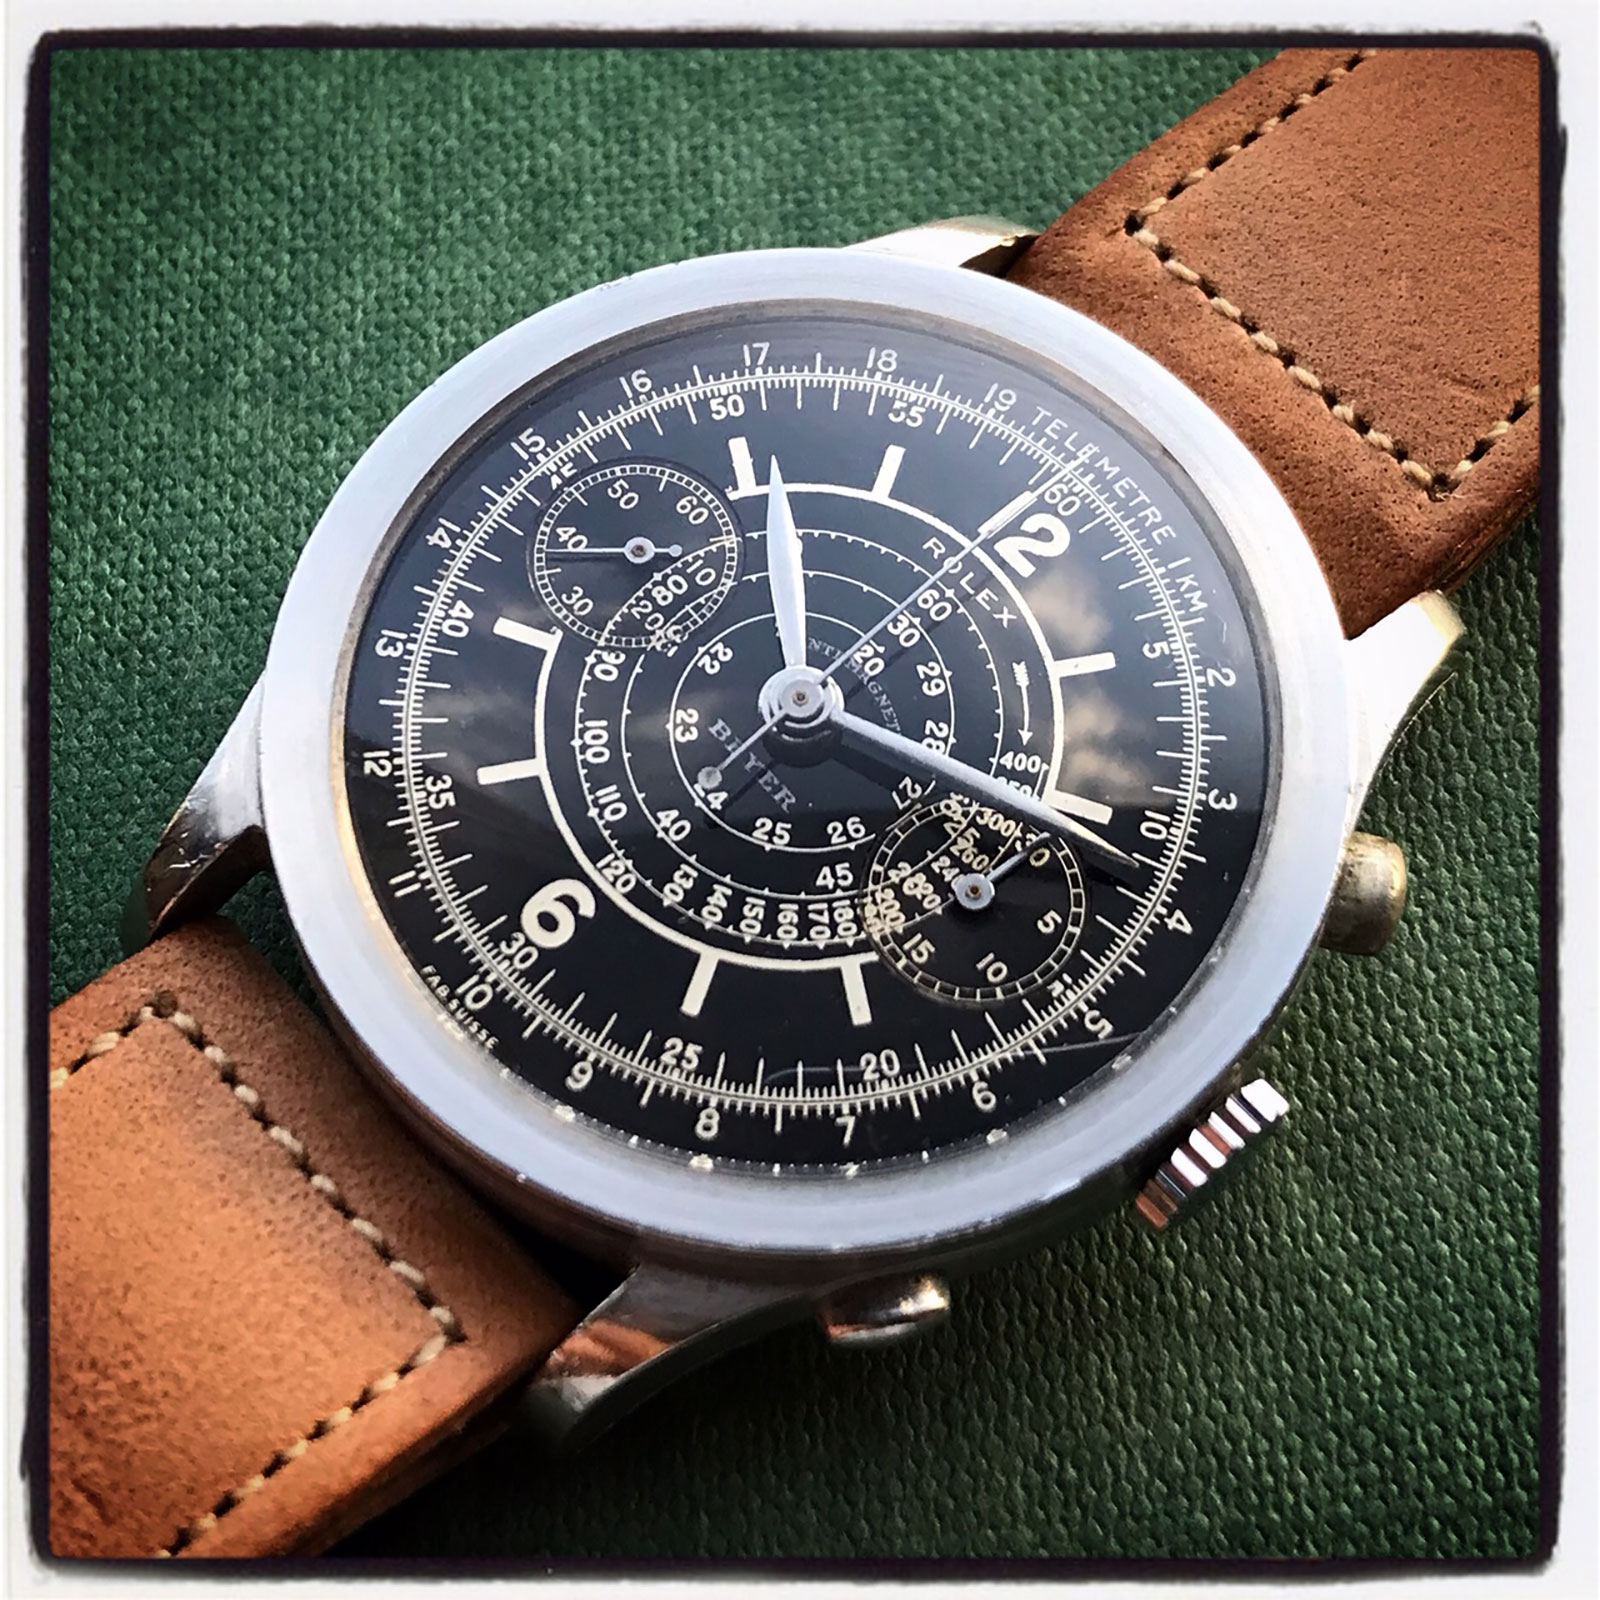 Rolex chronograph 2508 Beyer